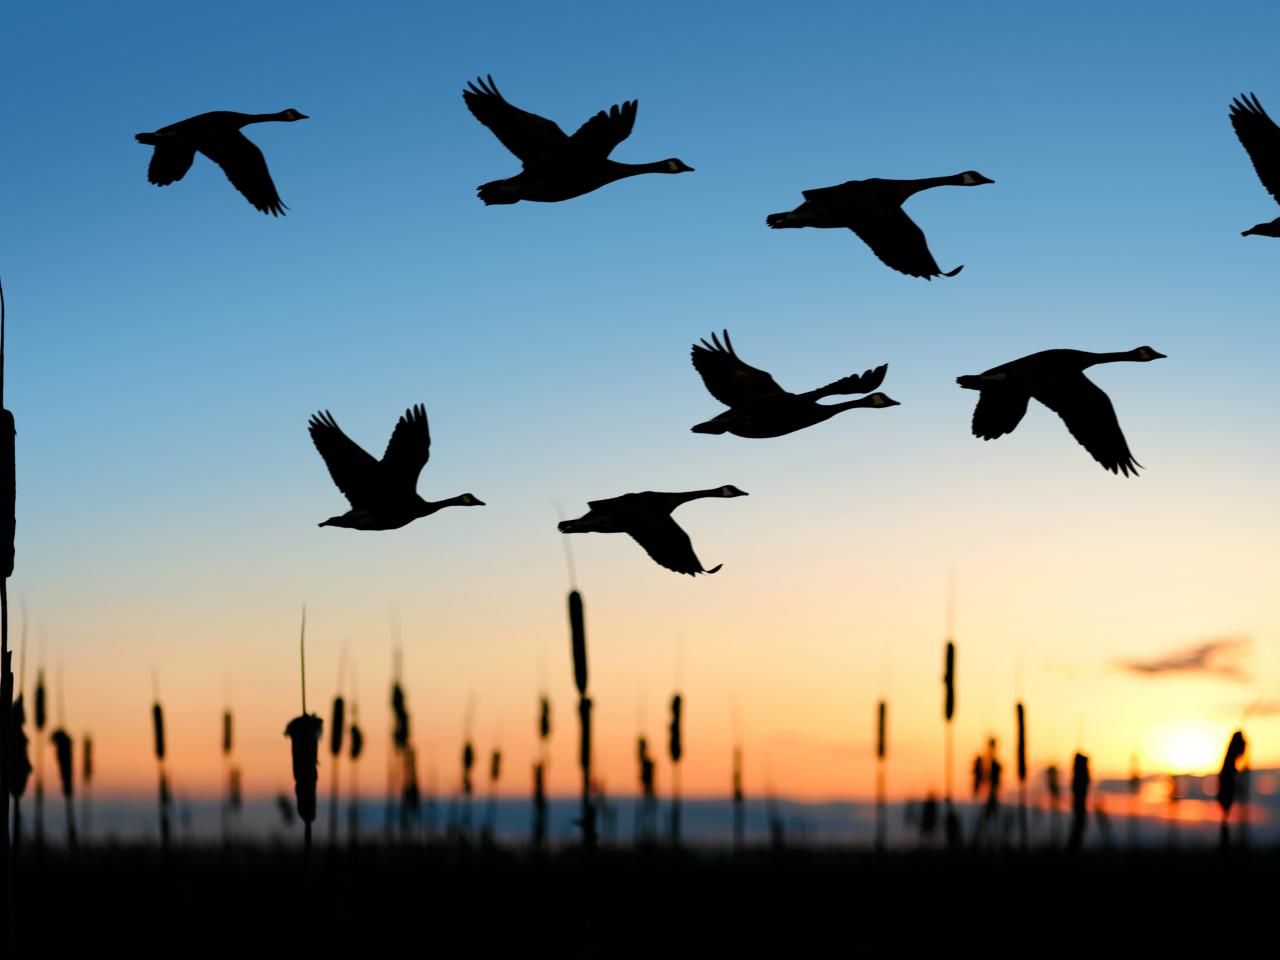 Capture winter flocks in flight, Birds